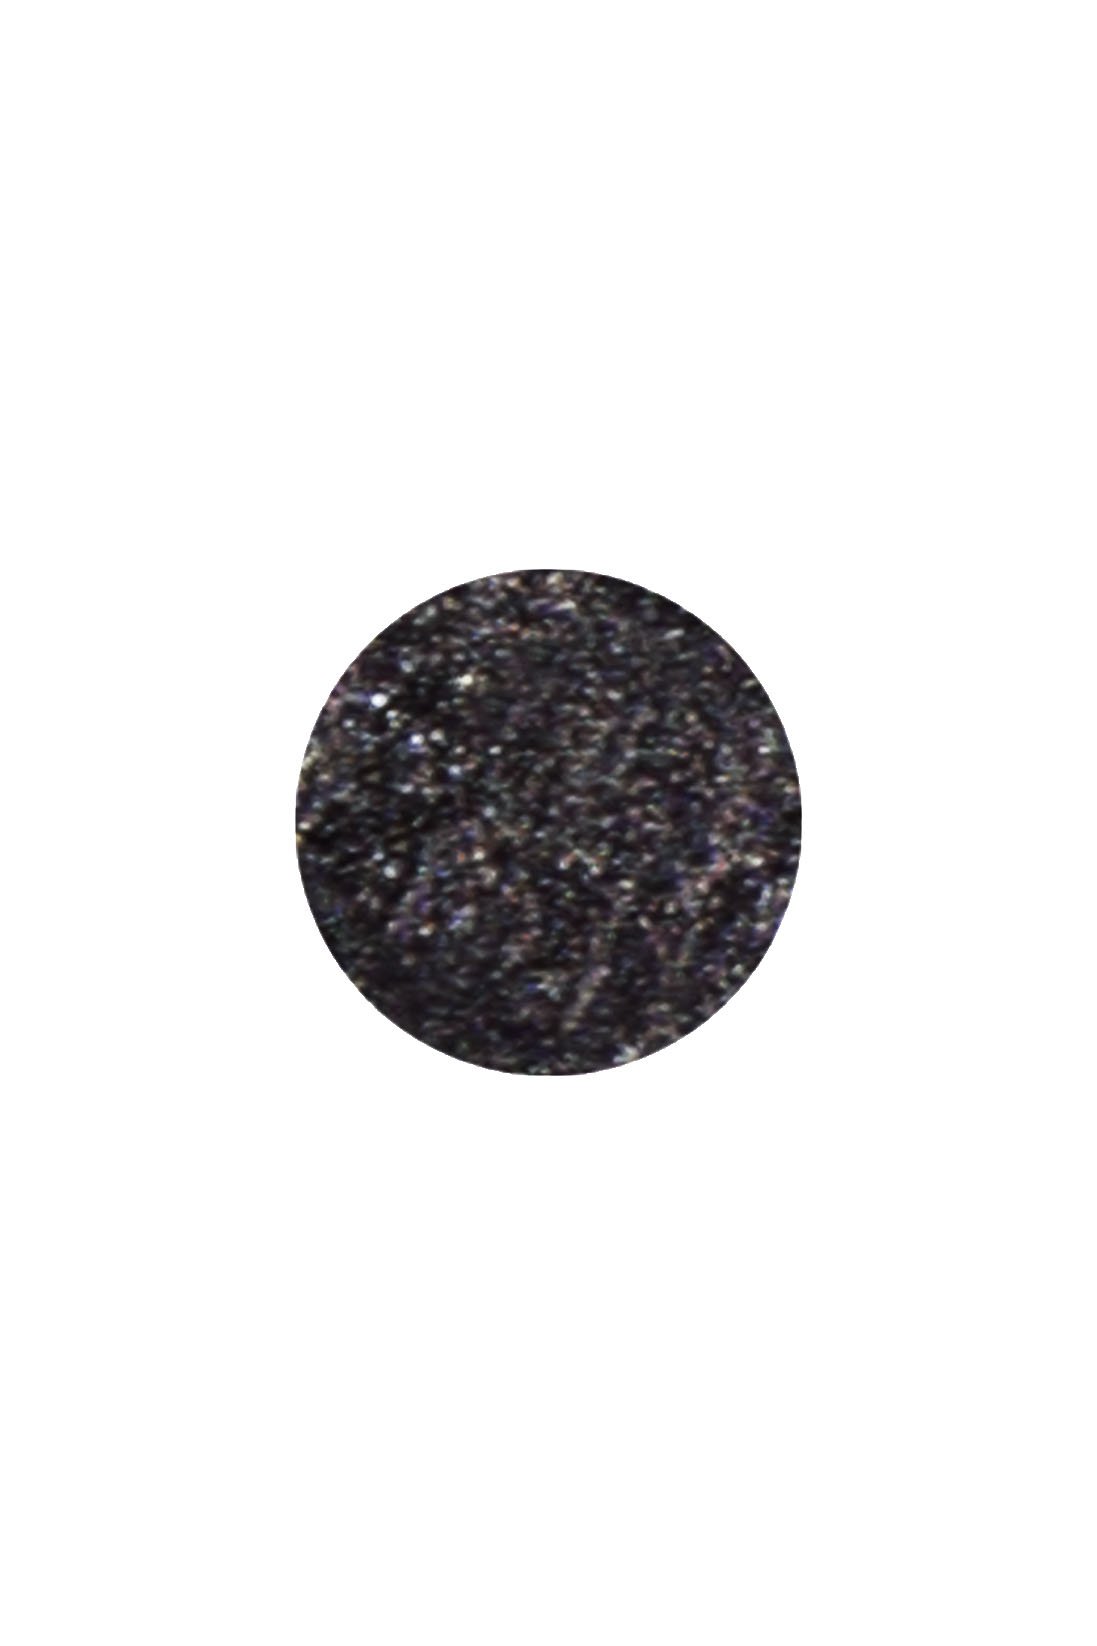  Anna Sui Dot of Lasting  SHINY BLACK Color Eyeliner (Waterproof)